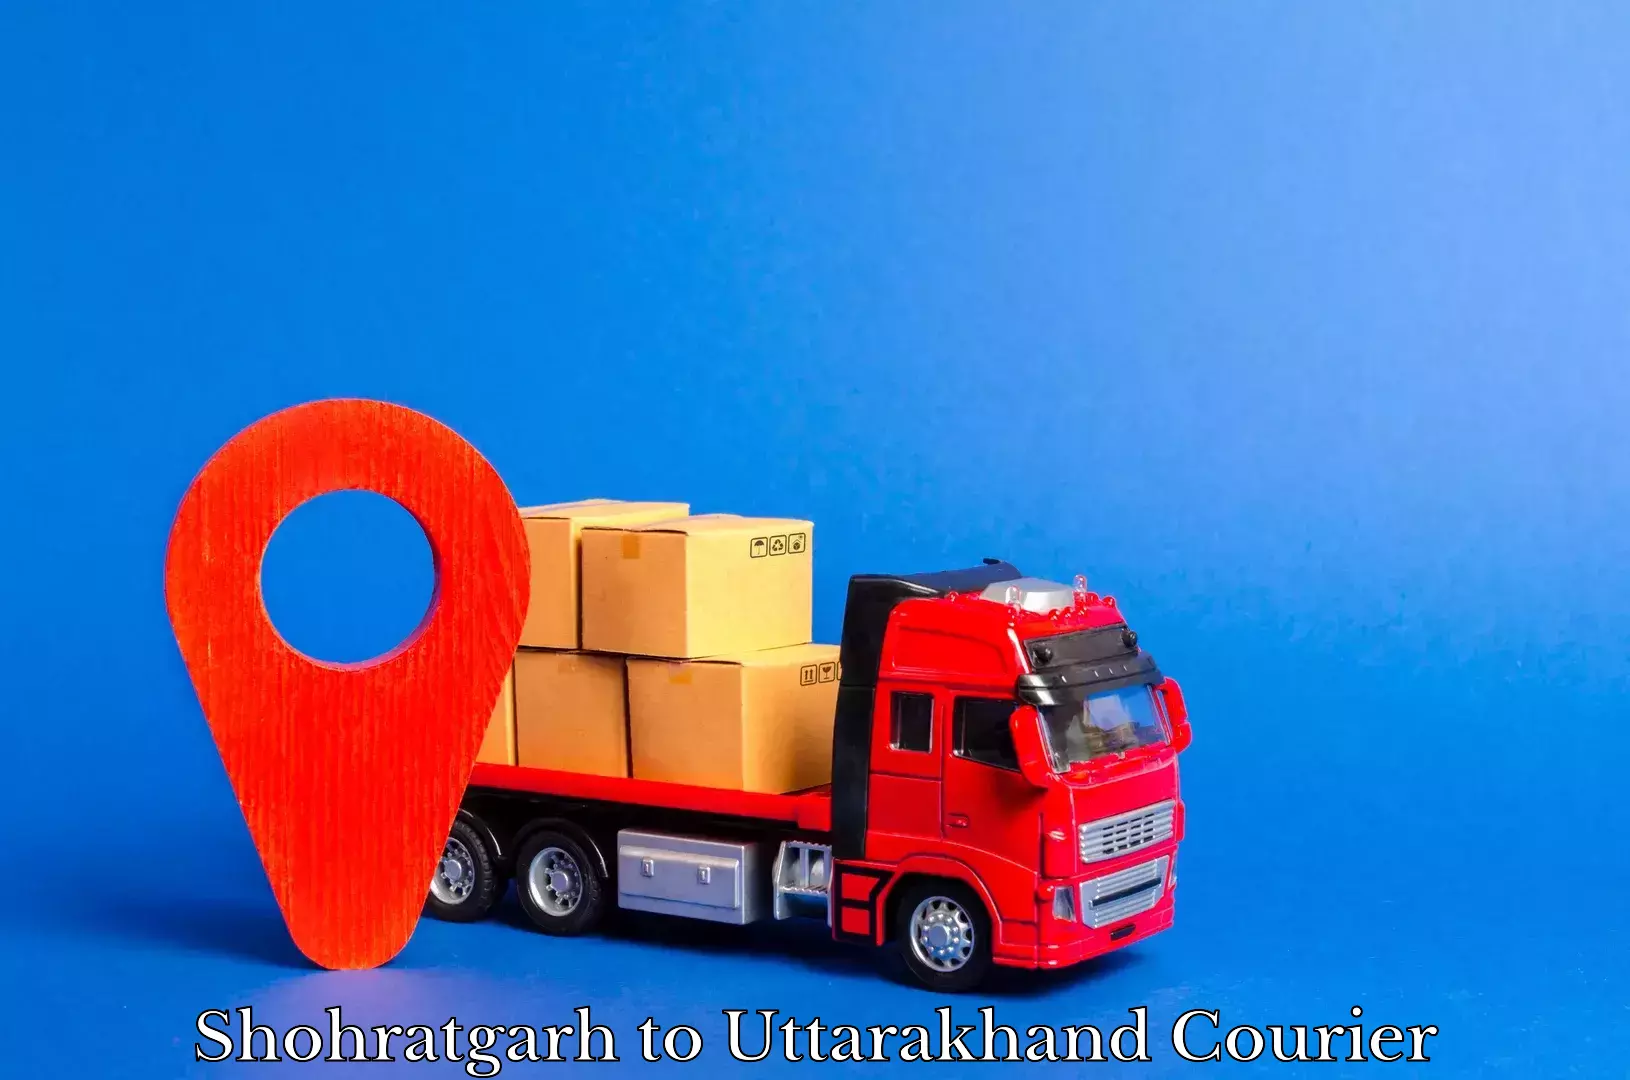 Efficient cargo handling Shohratgarh to Uttarakhand